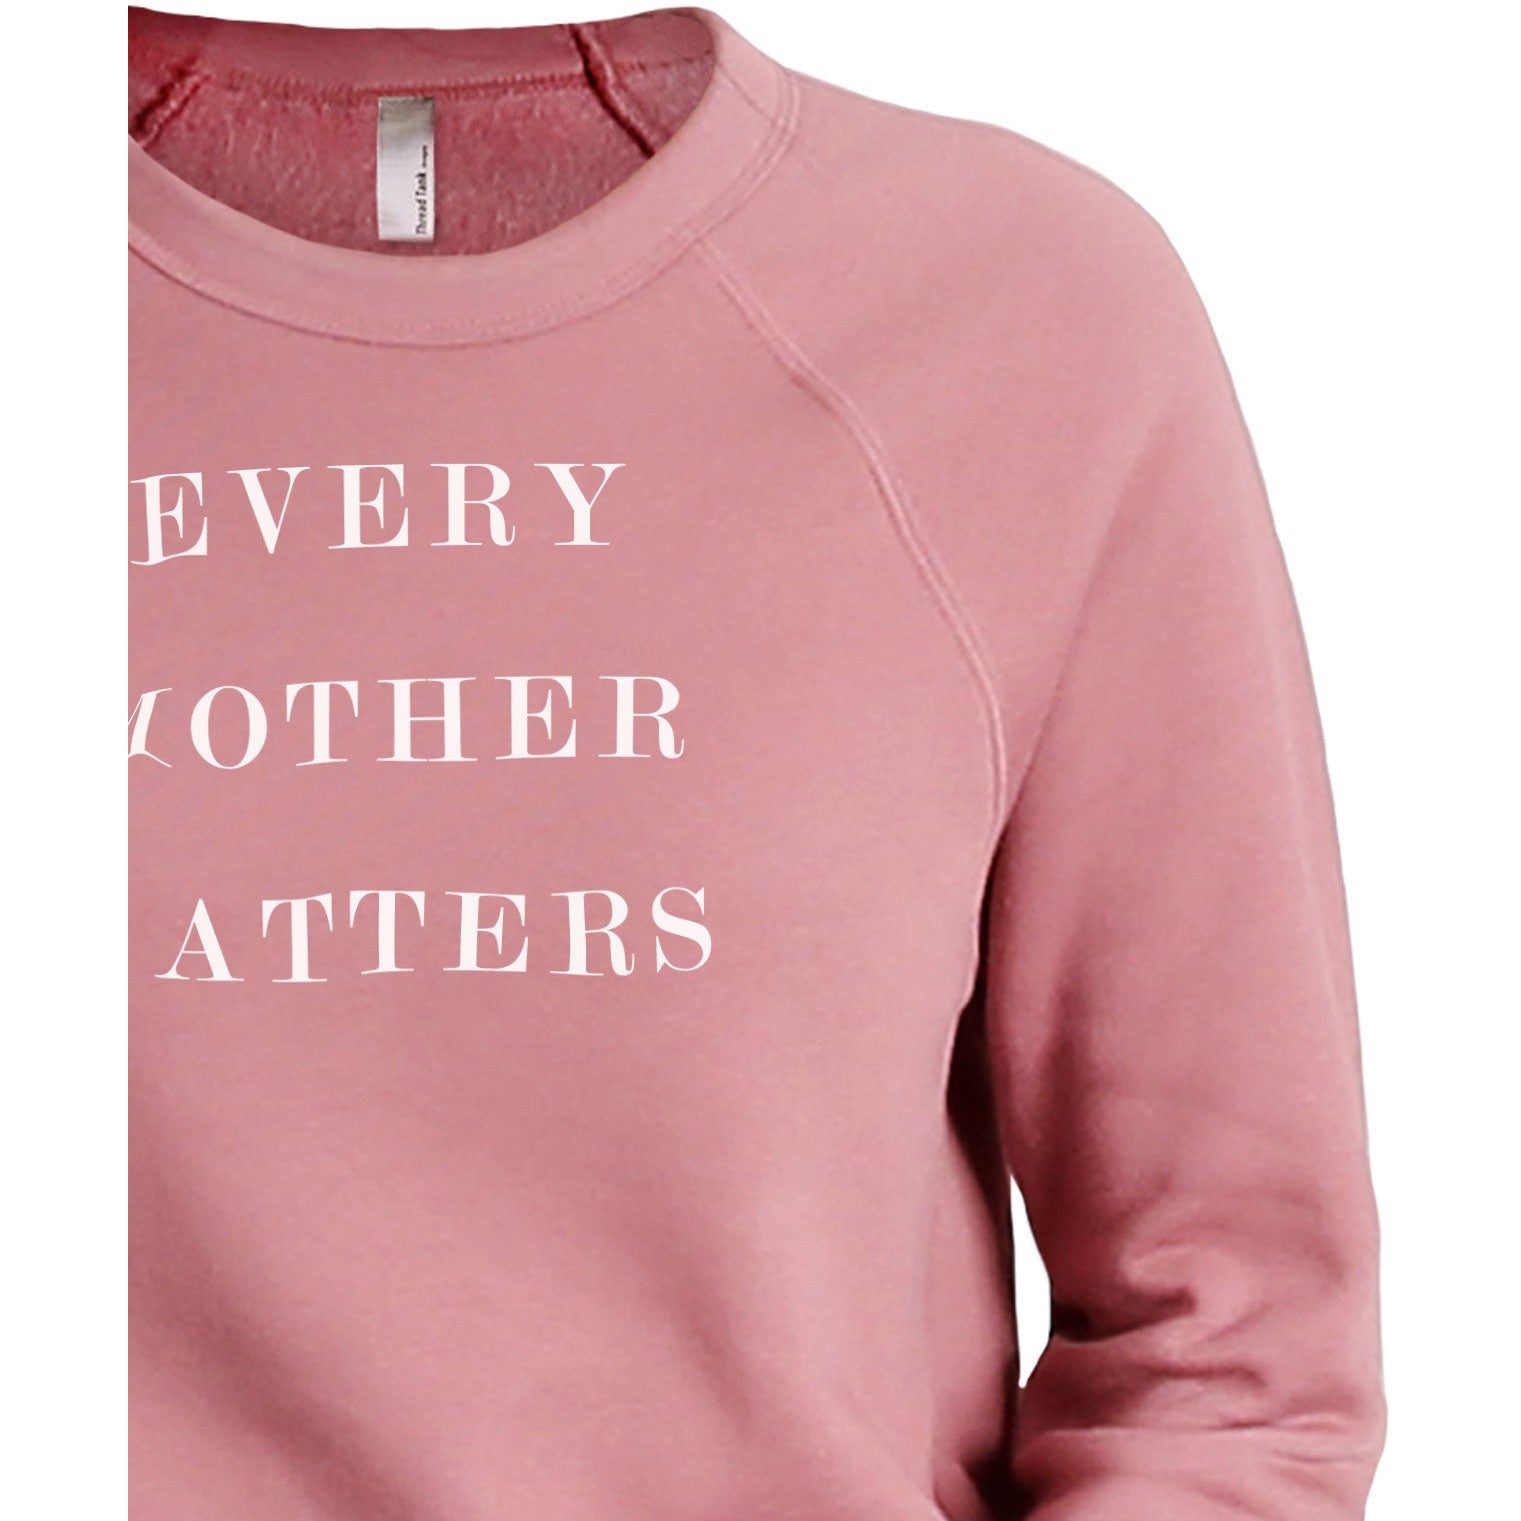 Every Mother Matters Women's Cozy Fleece Longsleeves Sweater Rouge Closeup Details